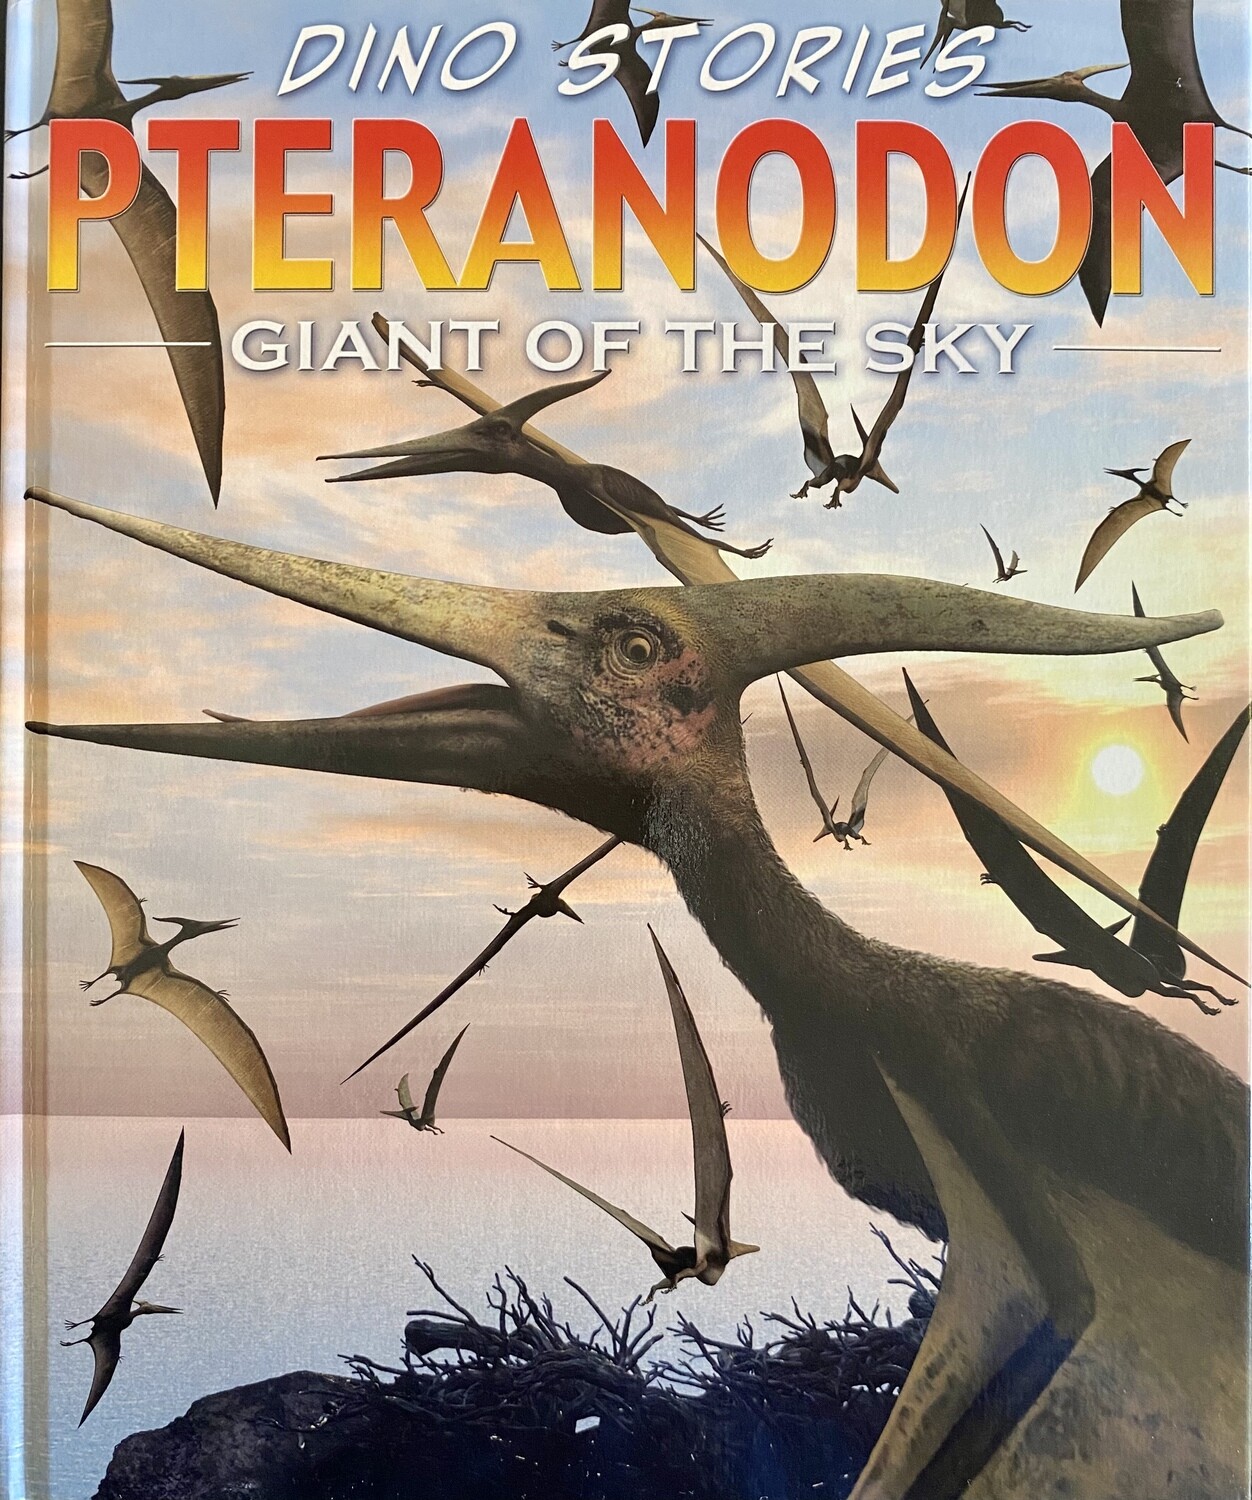 Dino Stories Pteranodon: Giant of the Sky